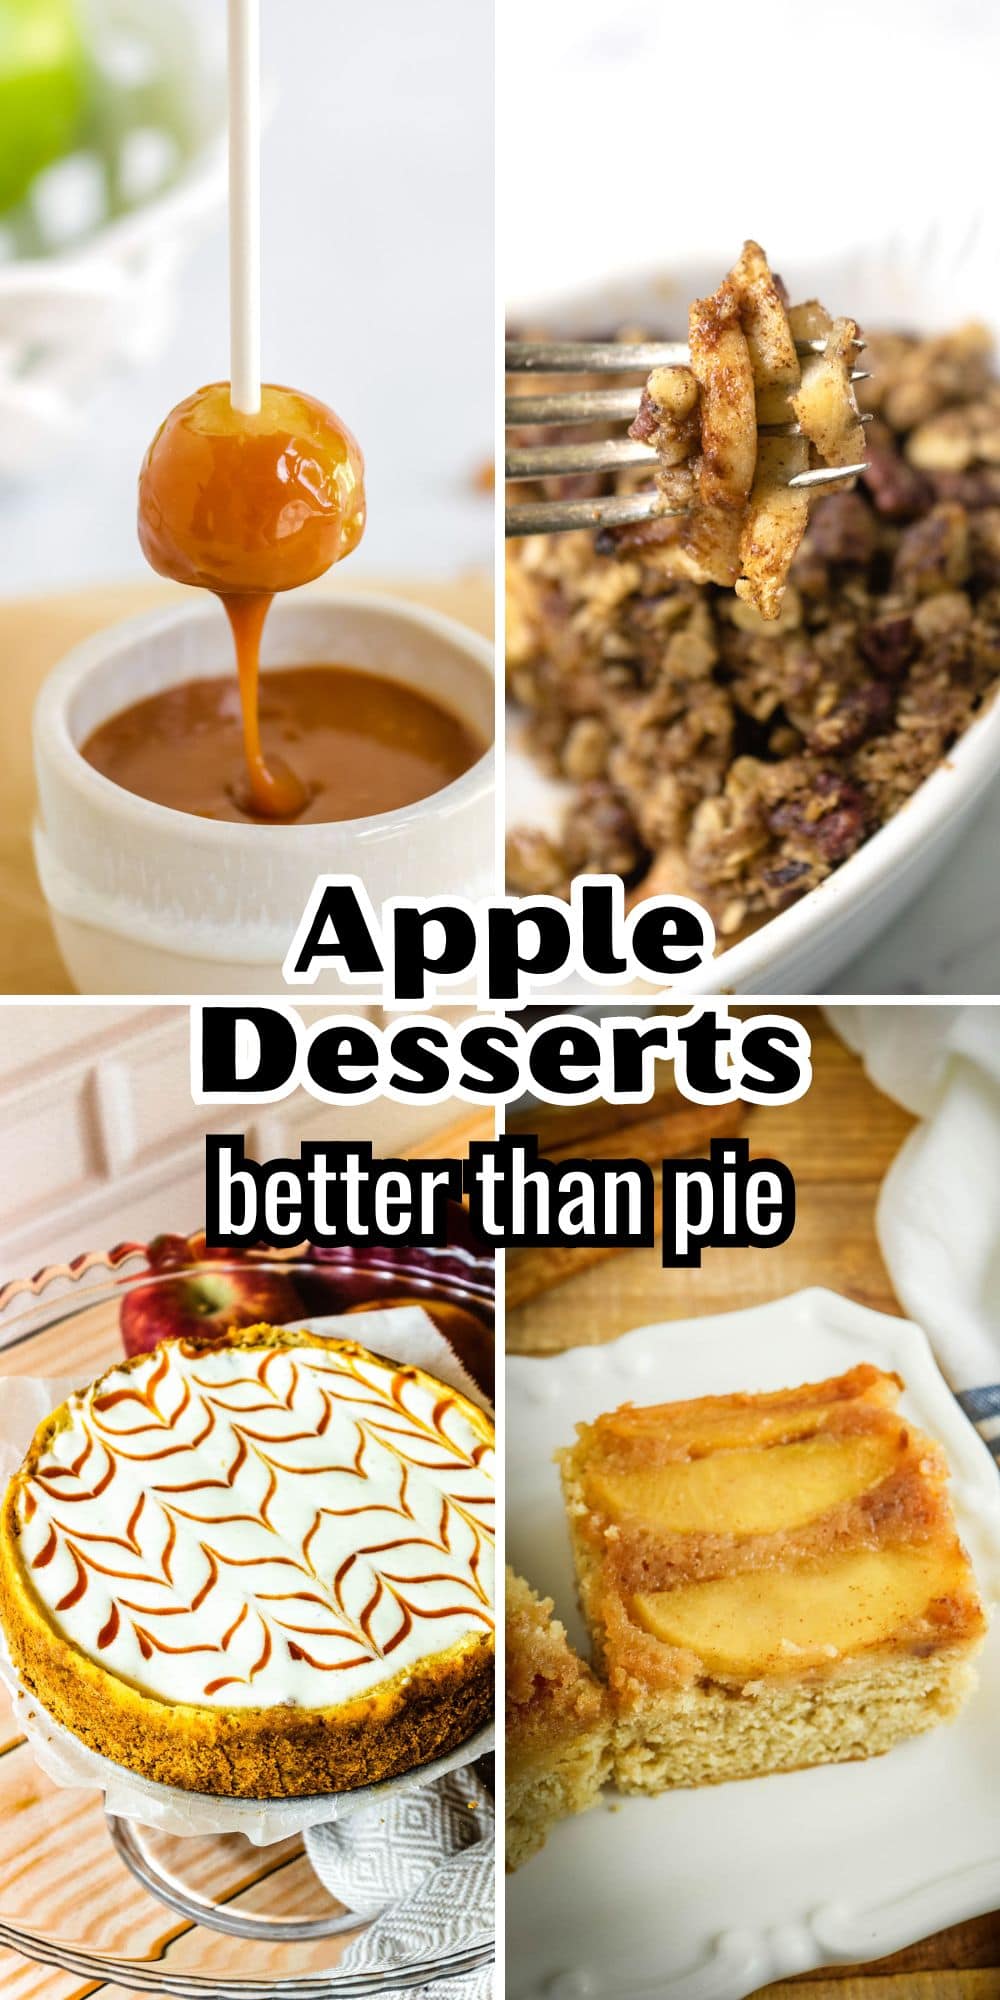 Apple desserts better than pie.